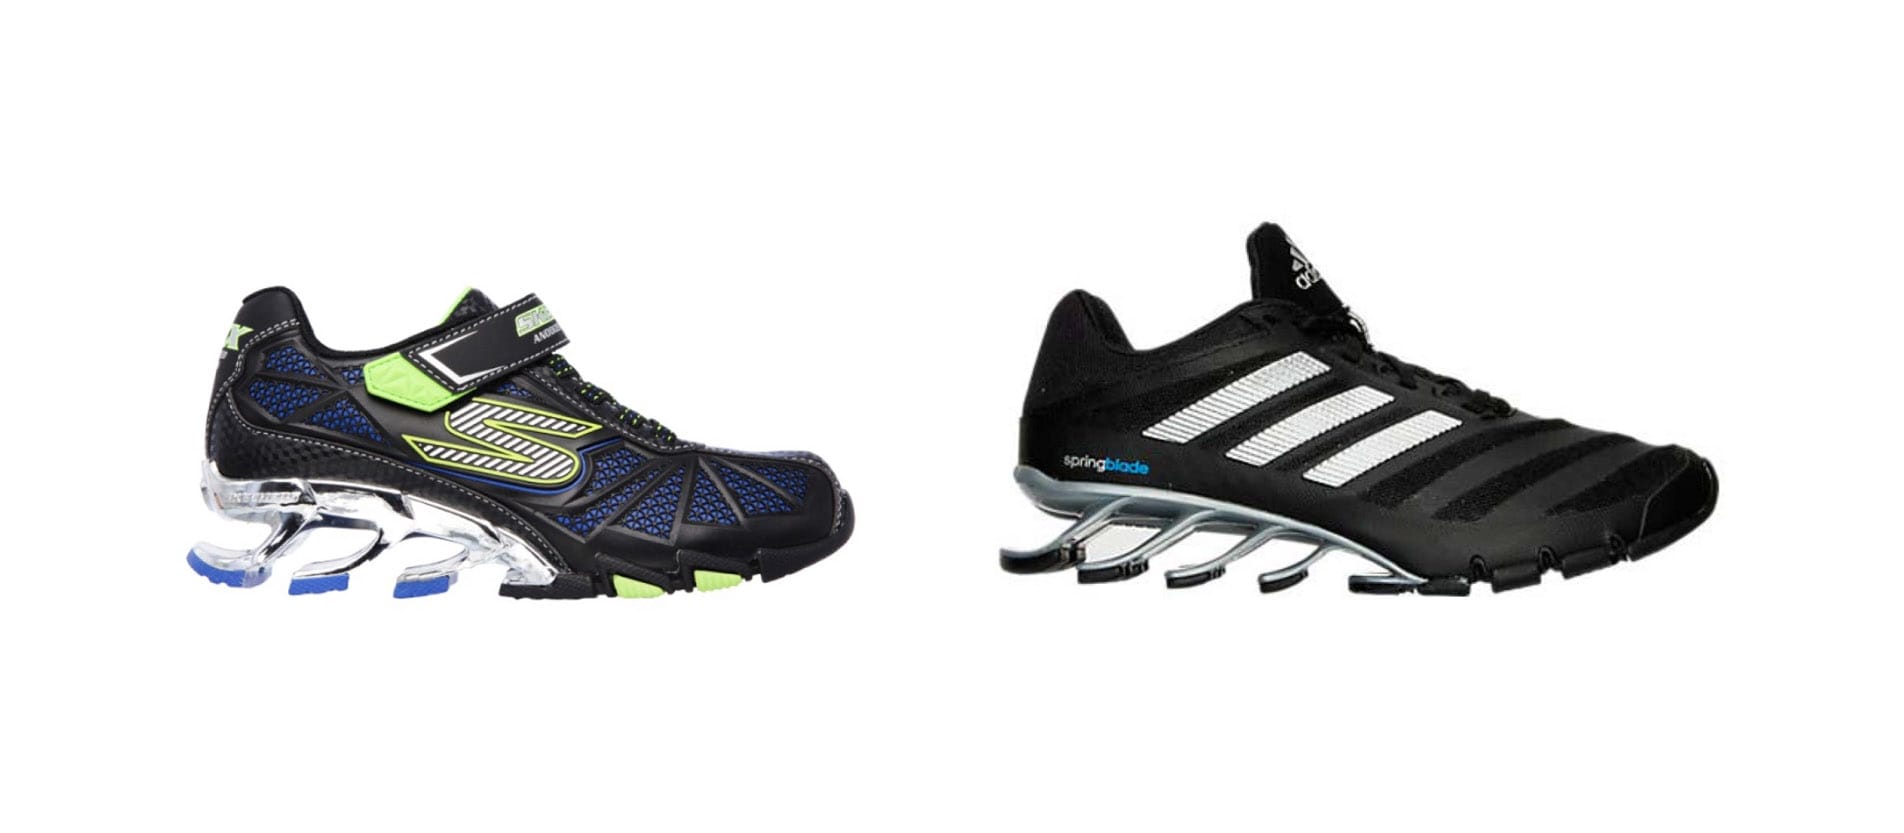 skechers vs adidas walking shoes